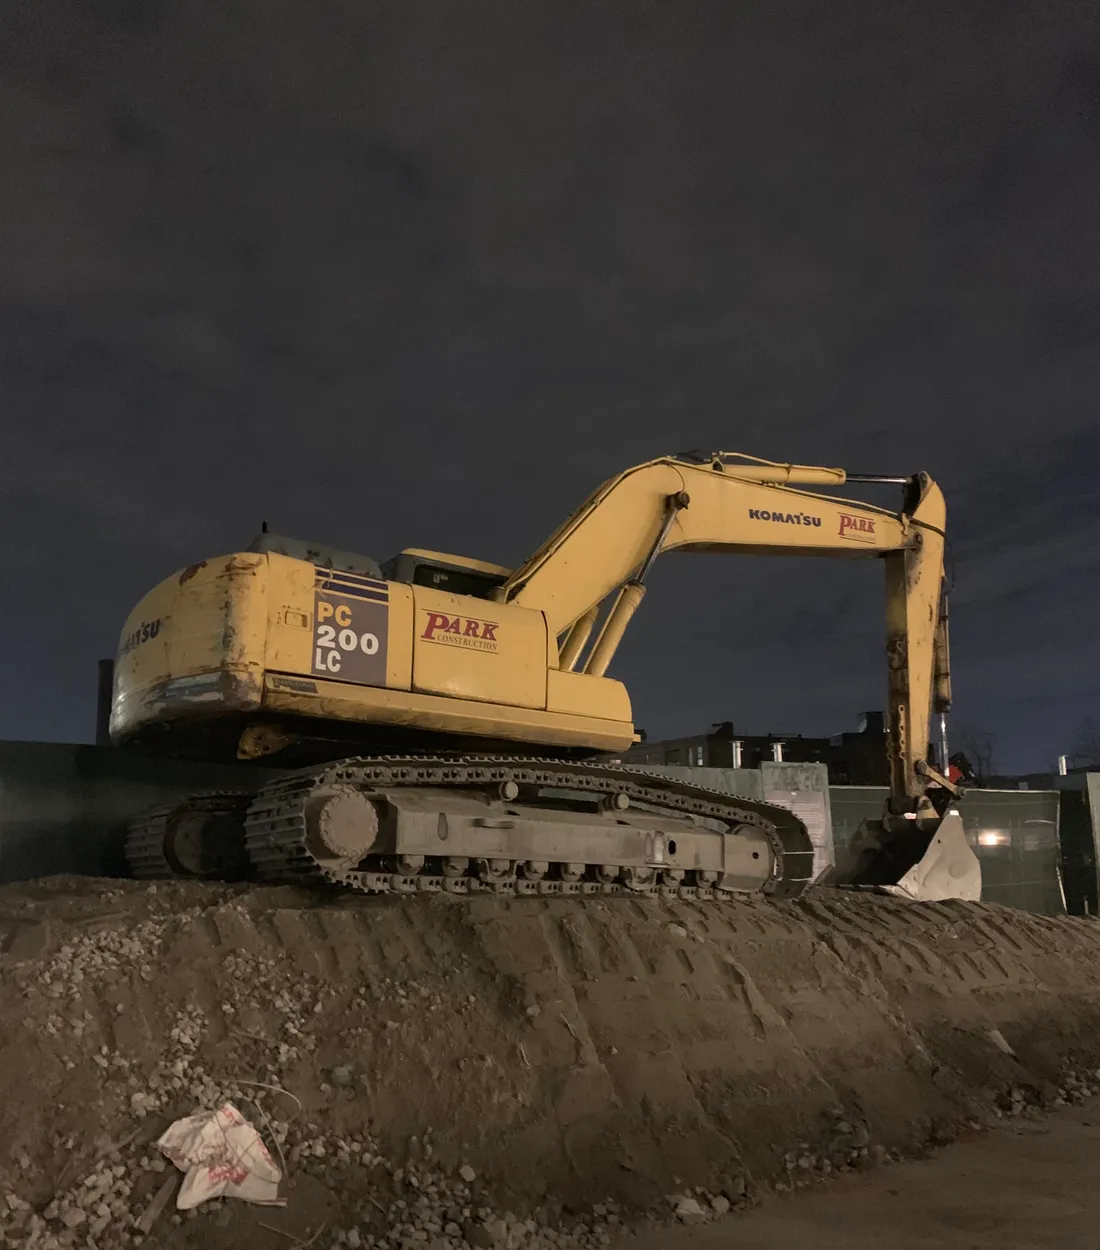 Excavator at construction site